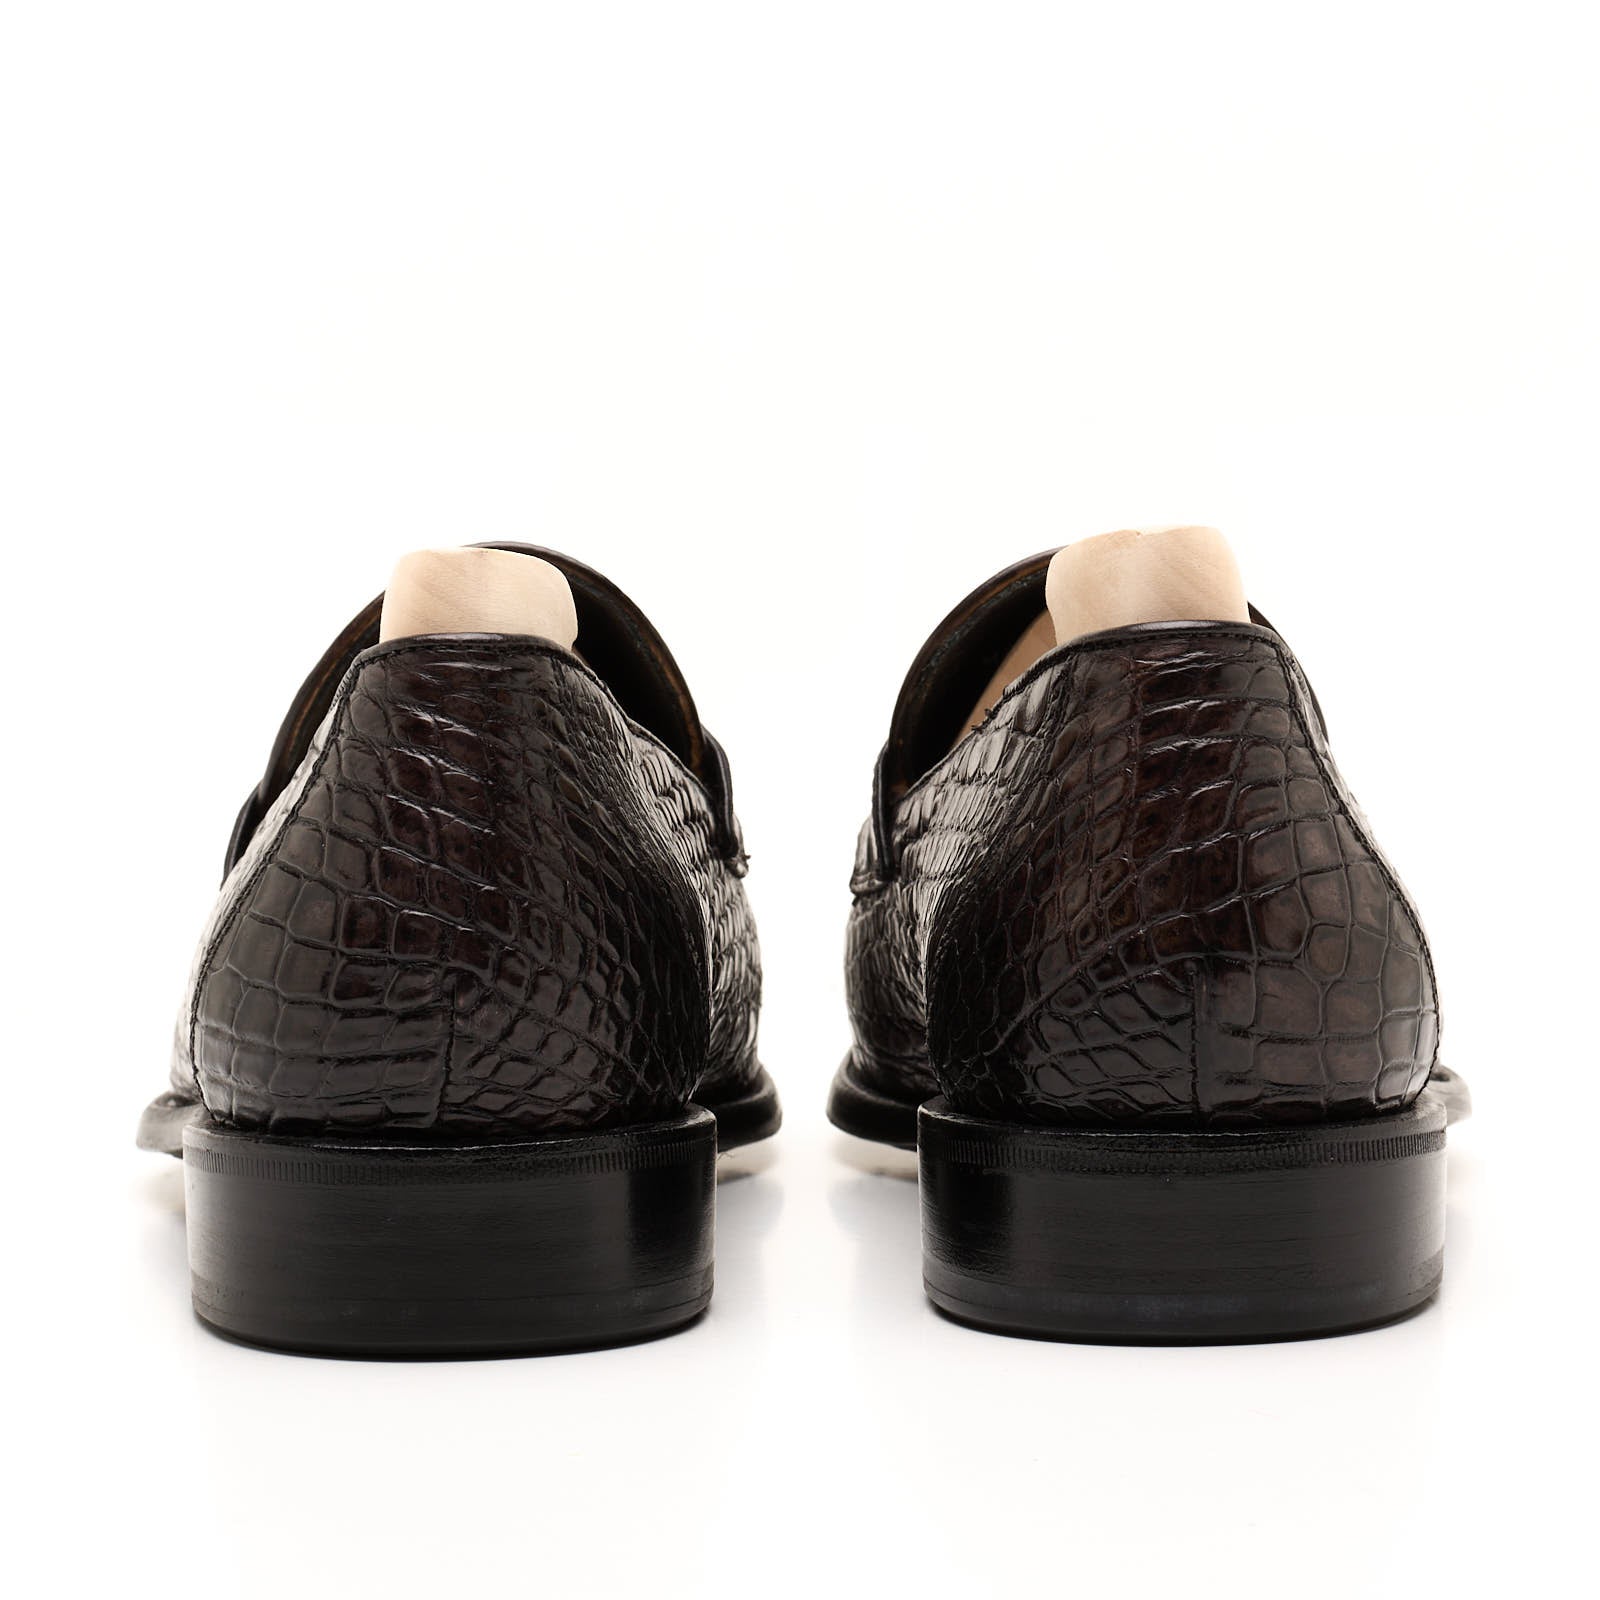 VANNUCCI Dark Brown Genuine Crocodile Leather Loafers Shoes EU 45 NEW US 11.5